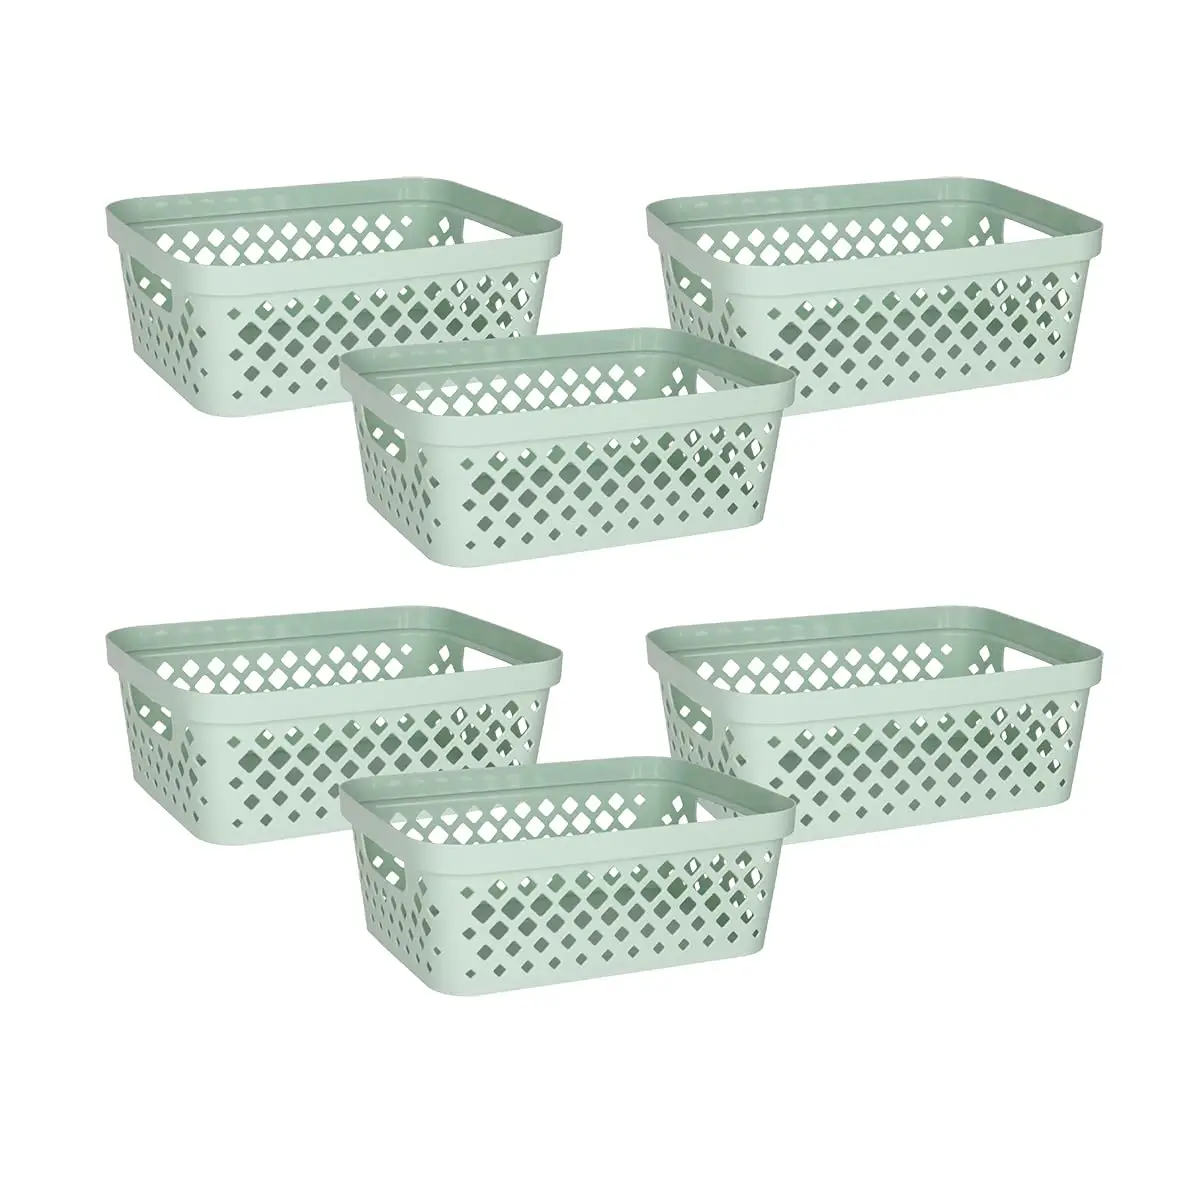 

Plastic Storage Basket Set - Value Pack of 6, Open Storage Bins, Nesting Organizer Boxes with Handles, 2 Gallon, Sage